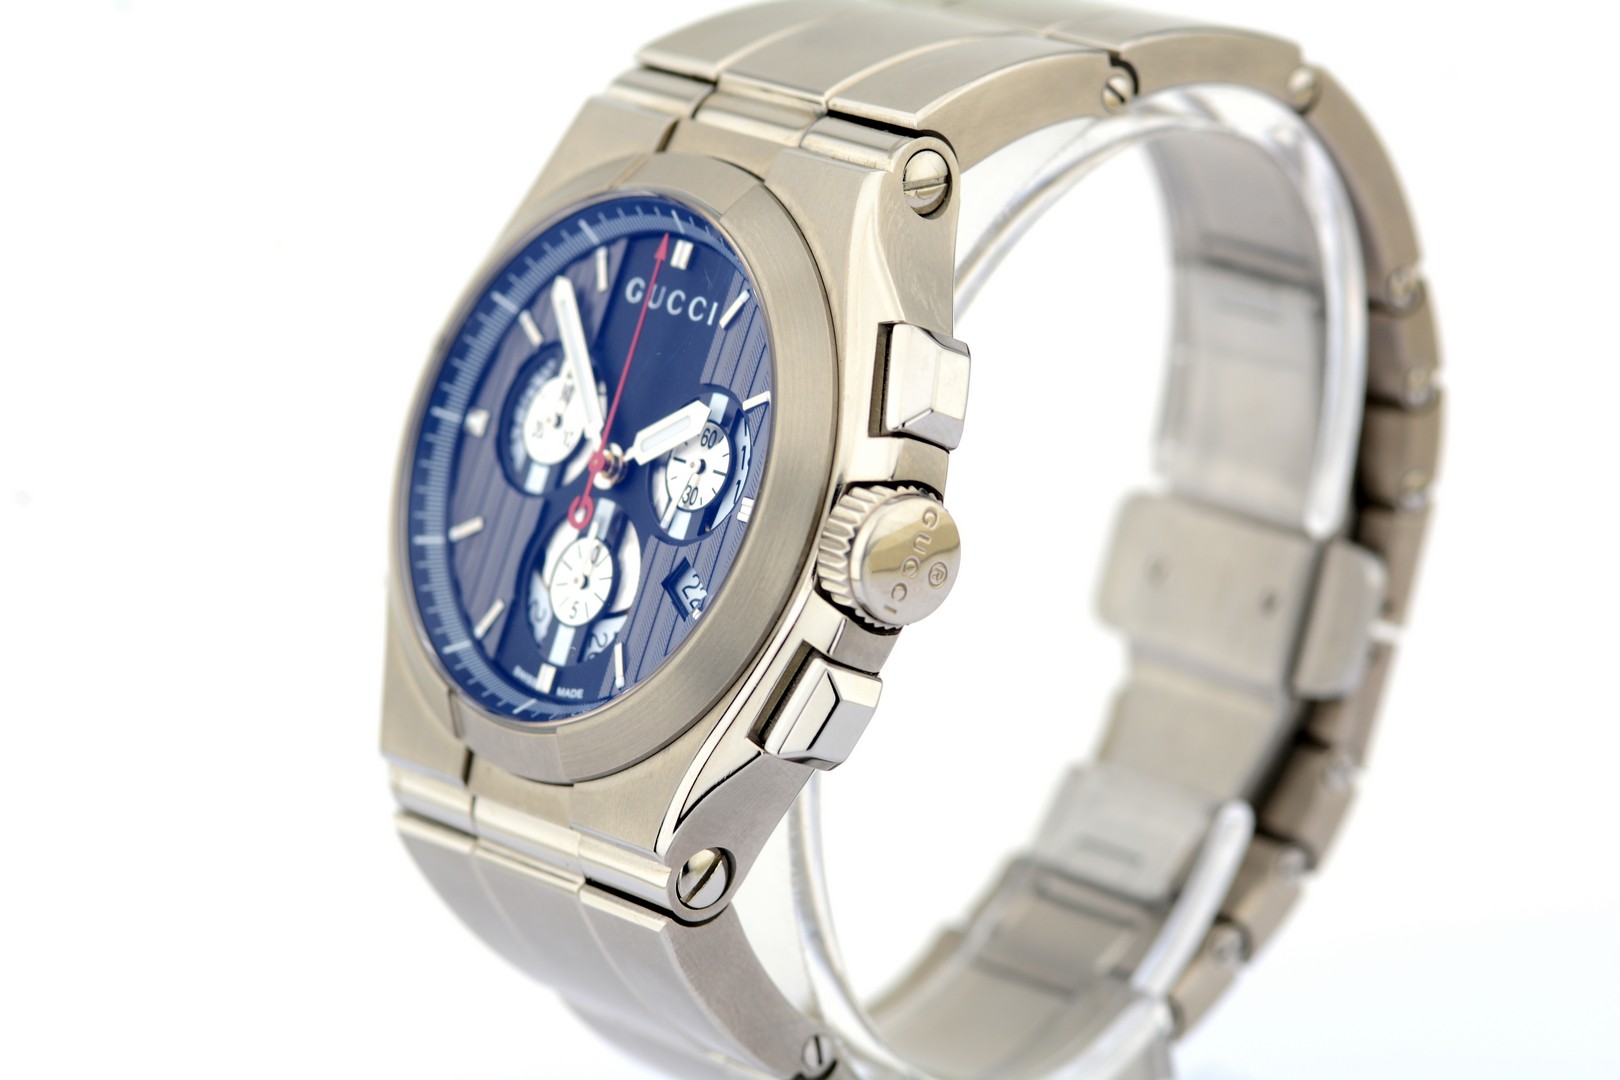 Gucci / Pantheon Chronograph - Gentlemen's Titanium Wristwatch - Image 7 of 12